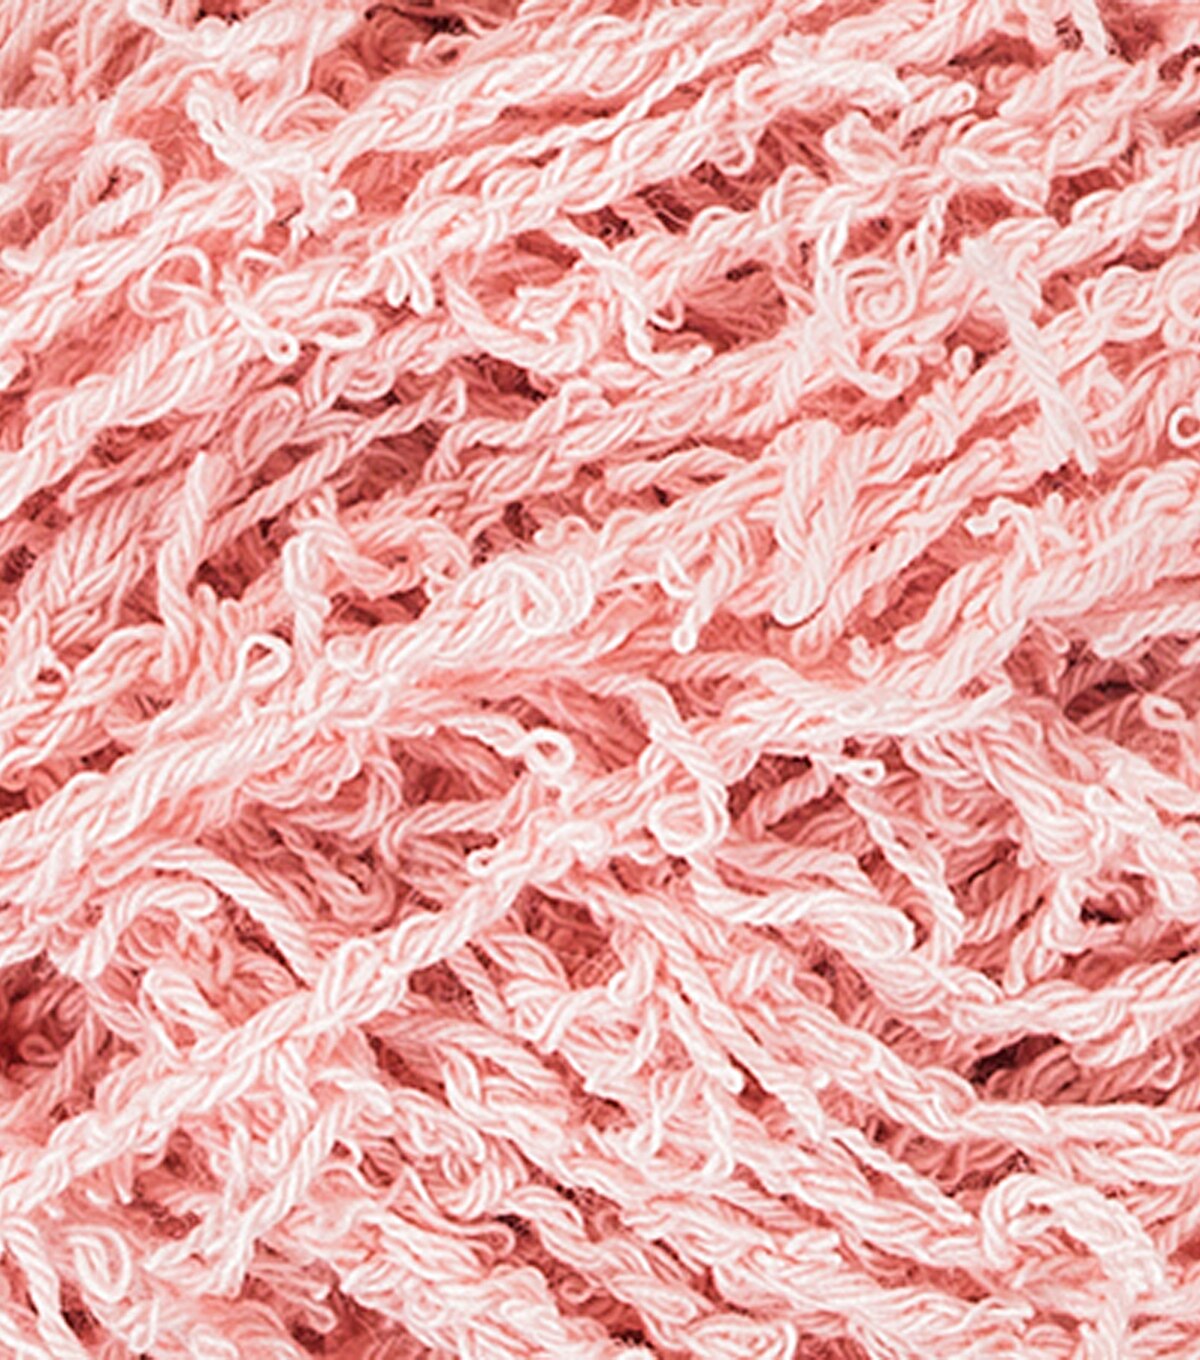 Red heart scrubby yarn patterns